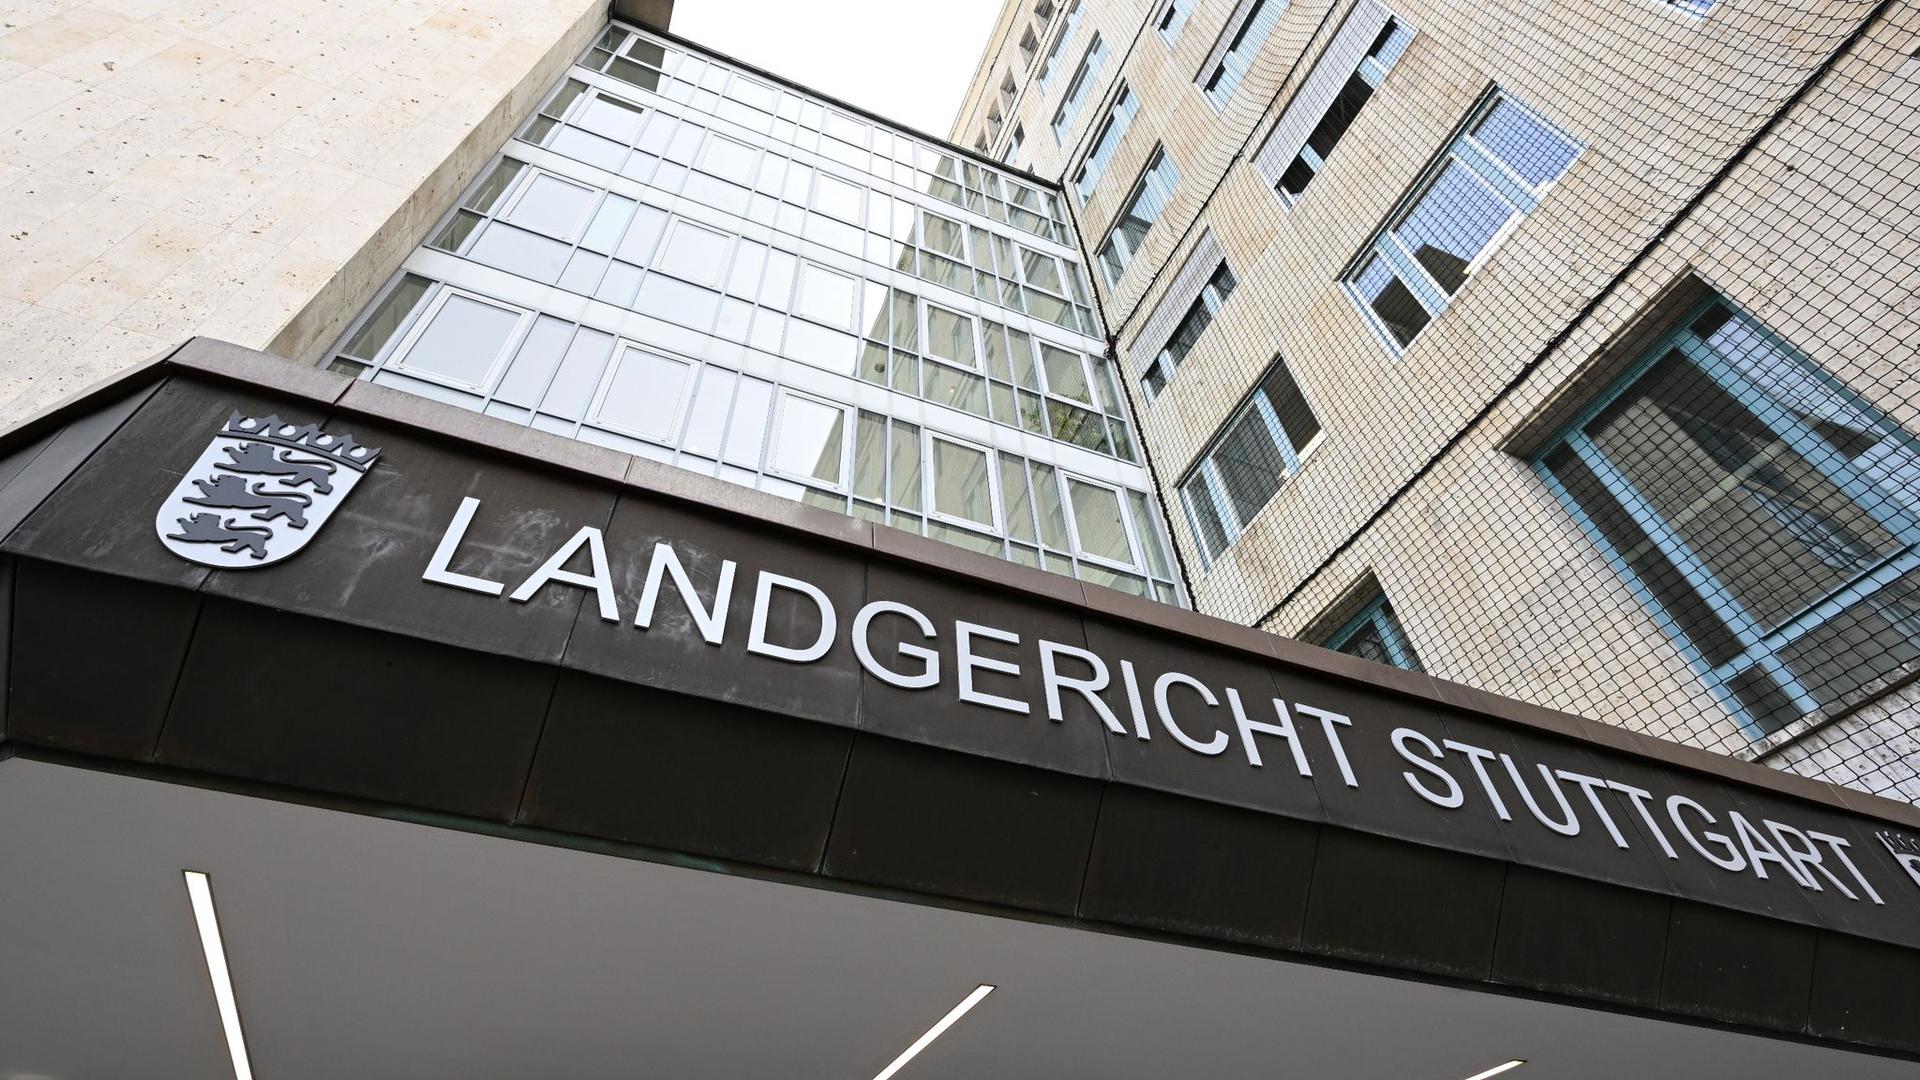 Der Schriftzug Landgericht Stuttgart ist am Eingang des Gebäudekomplexes angebracht.